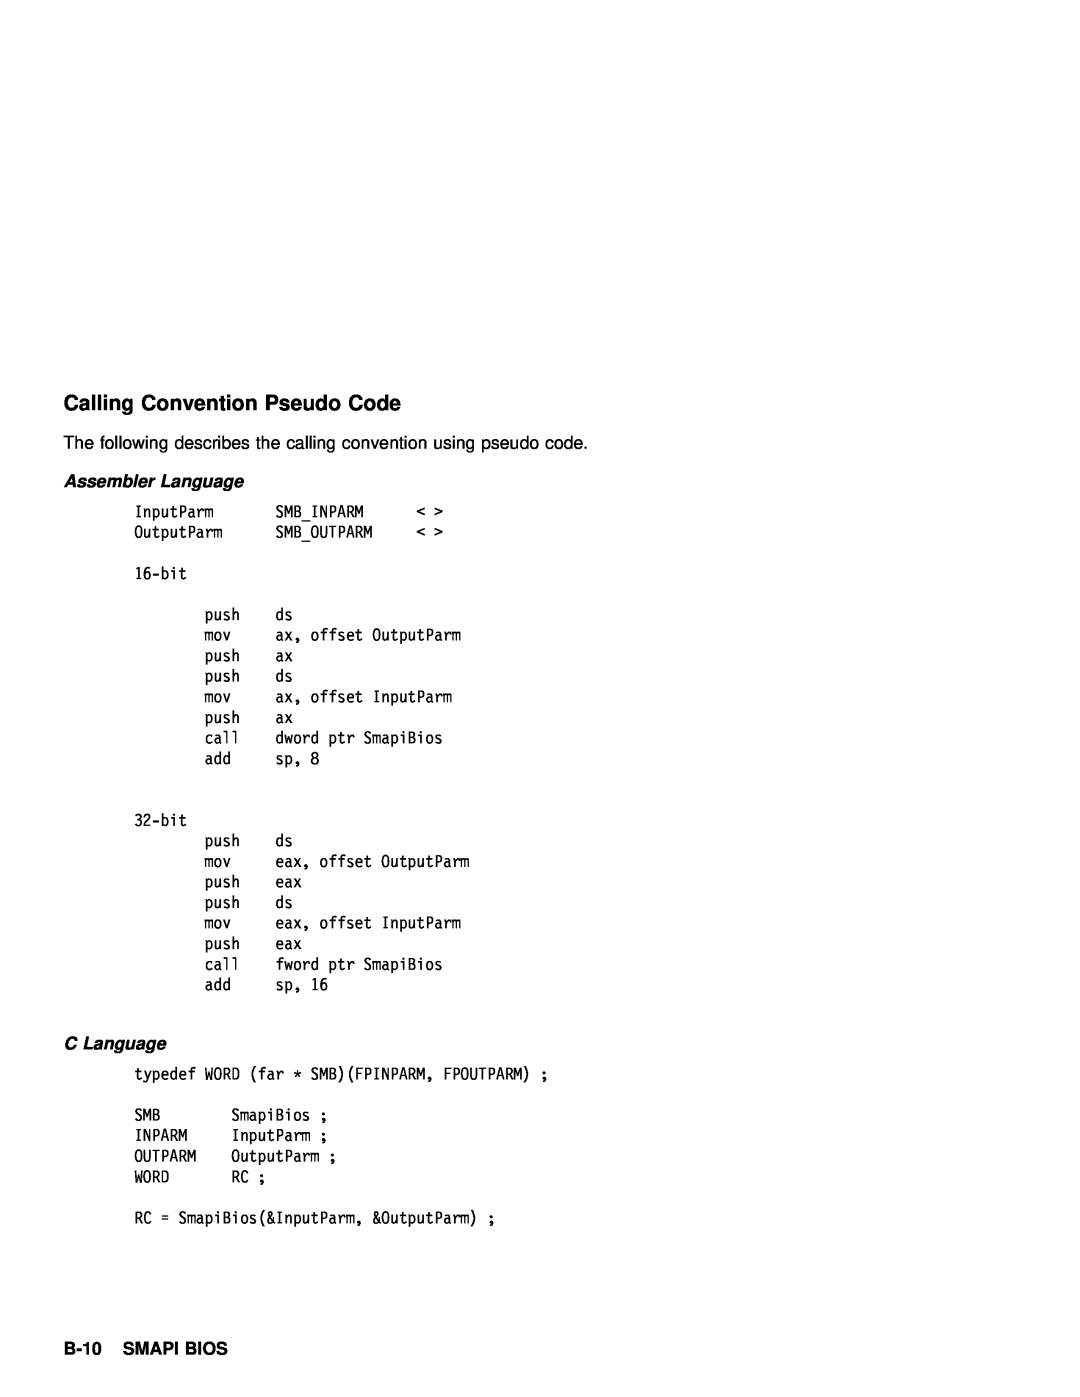 IBM 770 manual Calling Convention Pseudo Code, B-10 